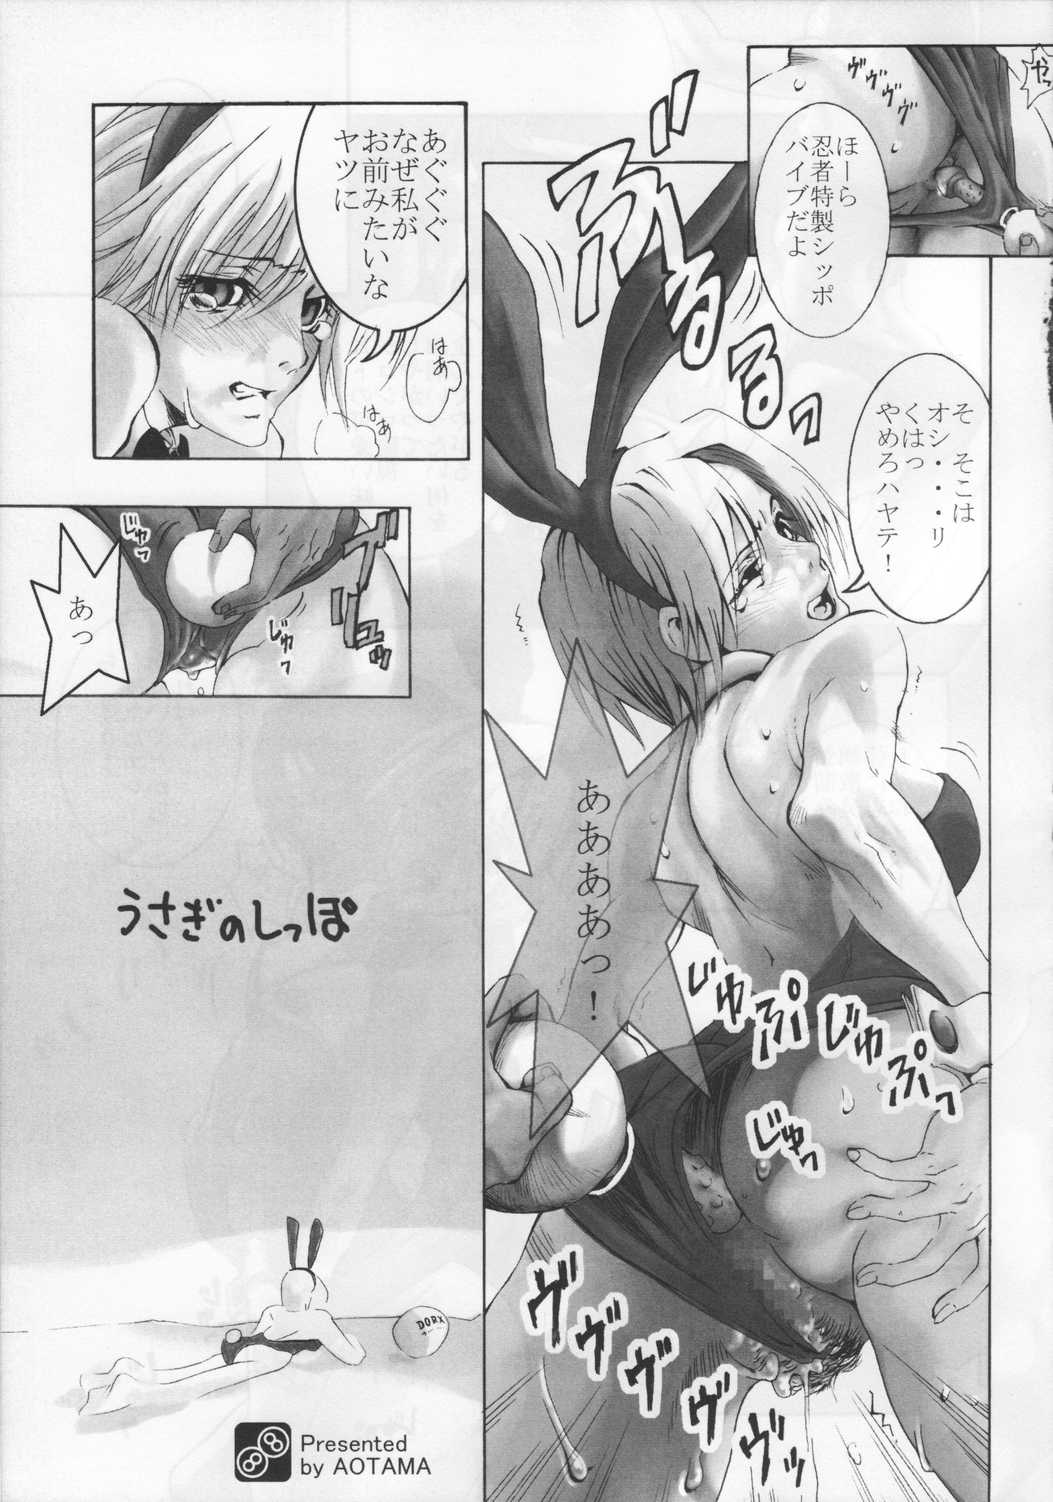 [Ninetail (Grifon)] hamabe no Koneko Vol.0 (Dead or Alive Xtreme) [Ninetail (Grifon)] 浜辺の娘猫 vol.0 (Dead or Alive Xtreme)